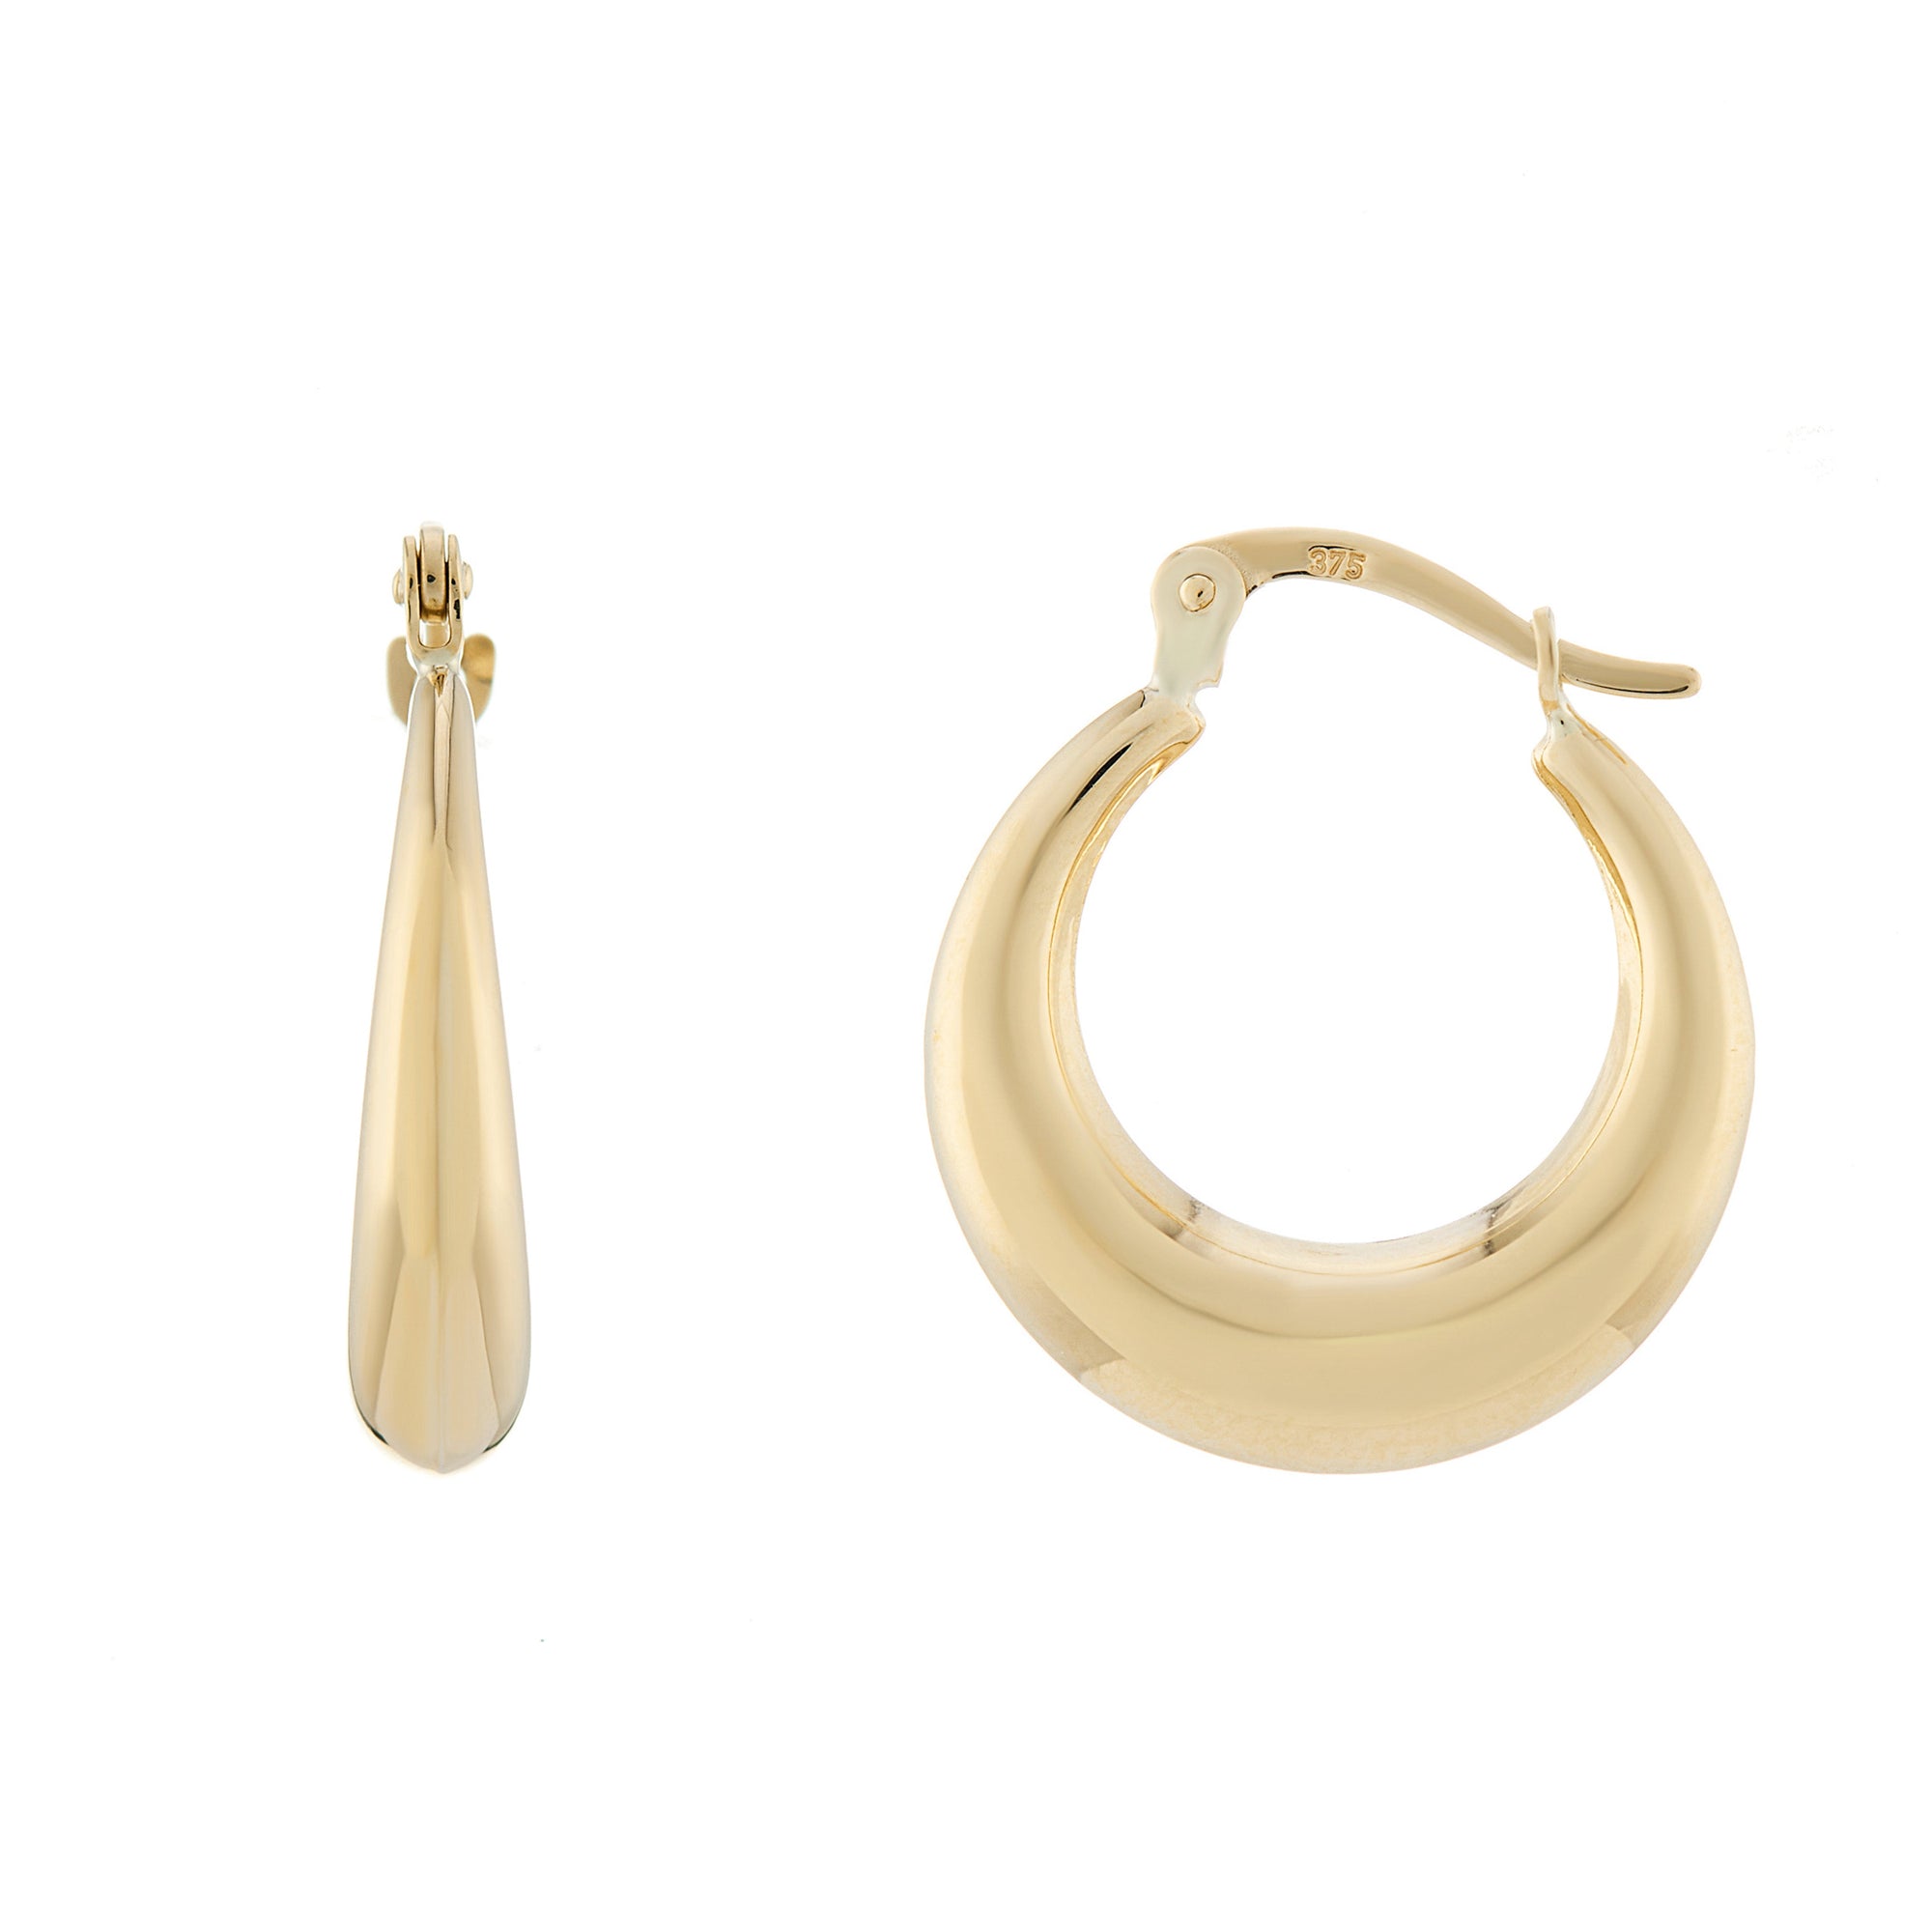 9ct gold plain creole hoop earrings